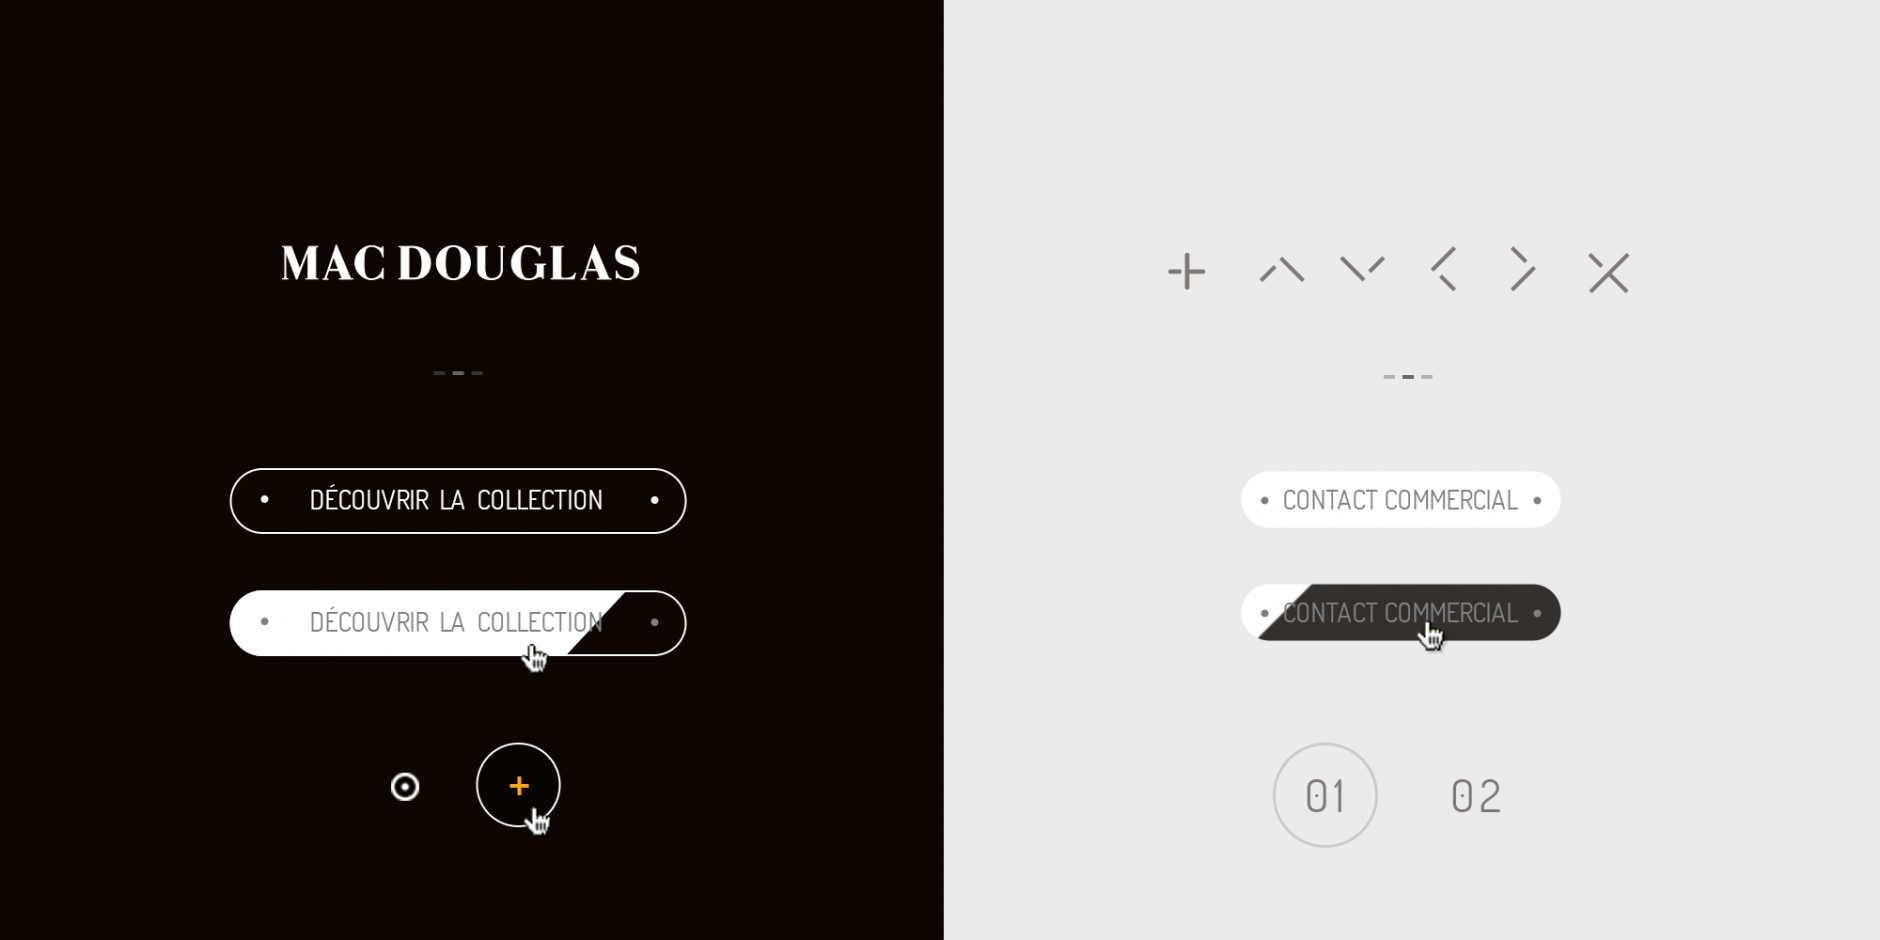 MacDouglas fashion webdesign responsive site vitrine collection UI elements - mael burgy